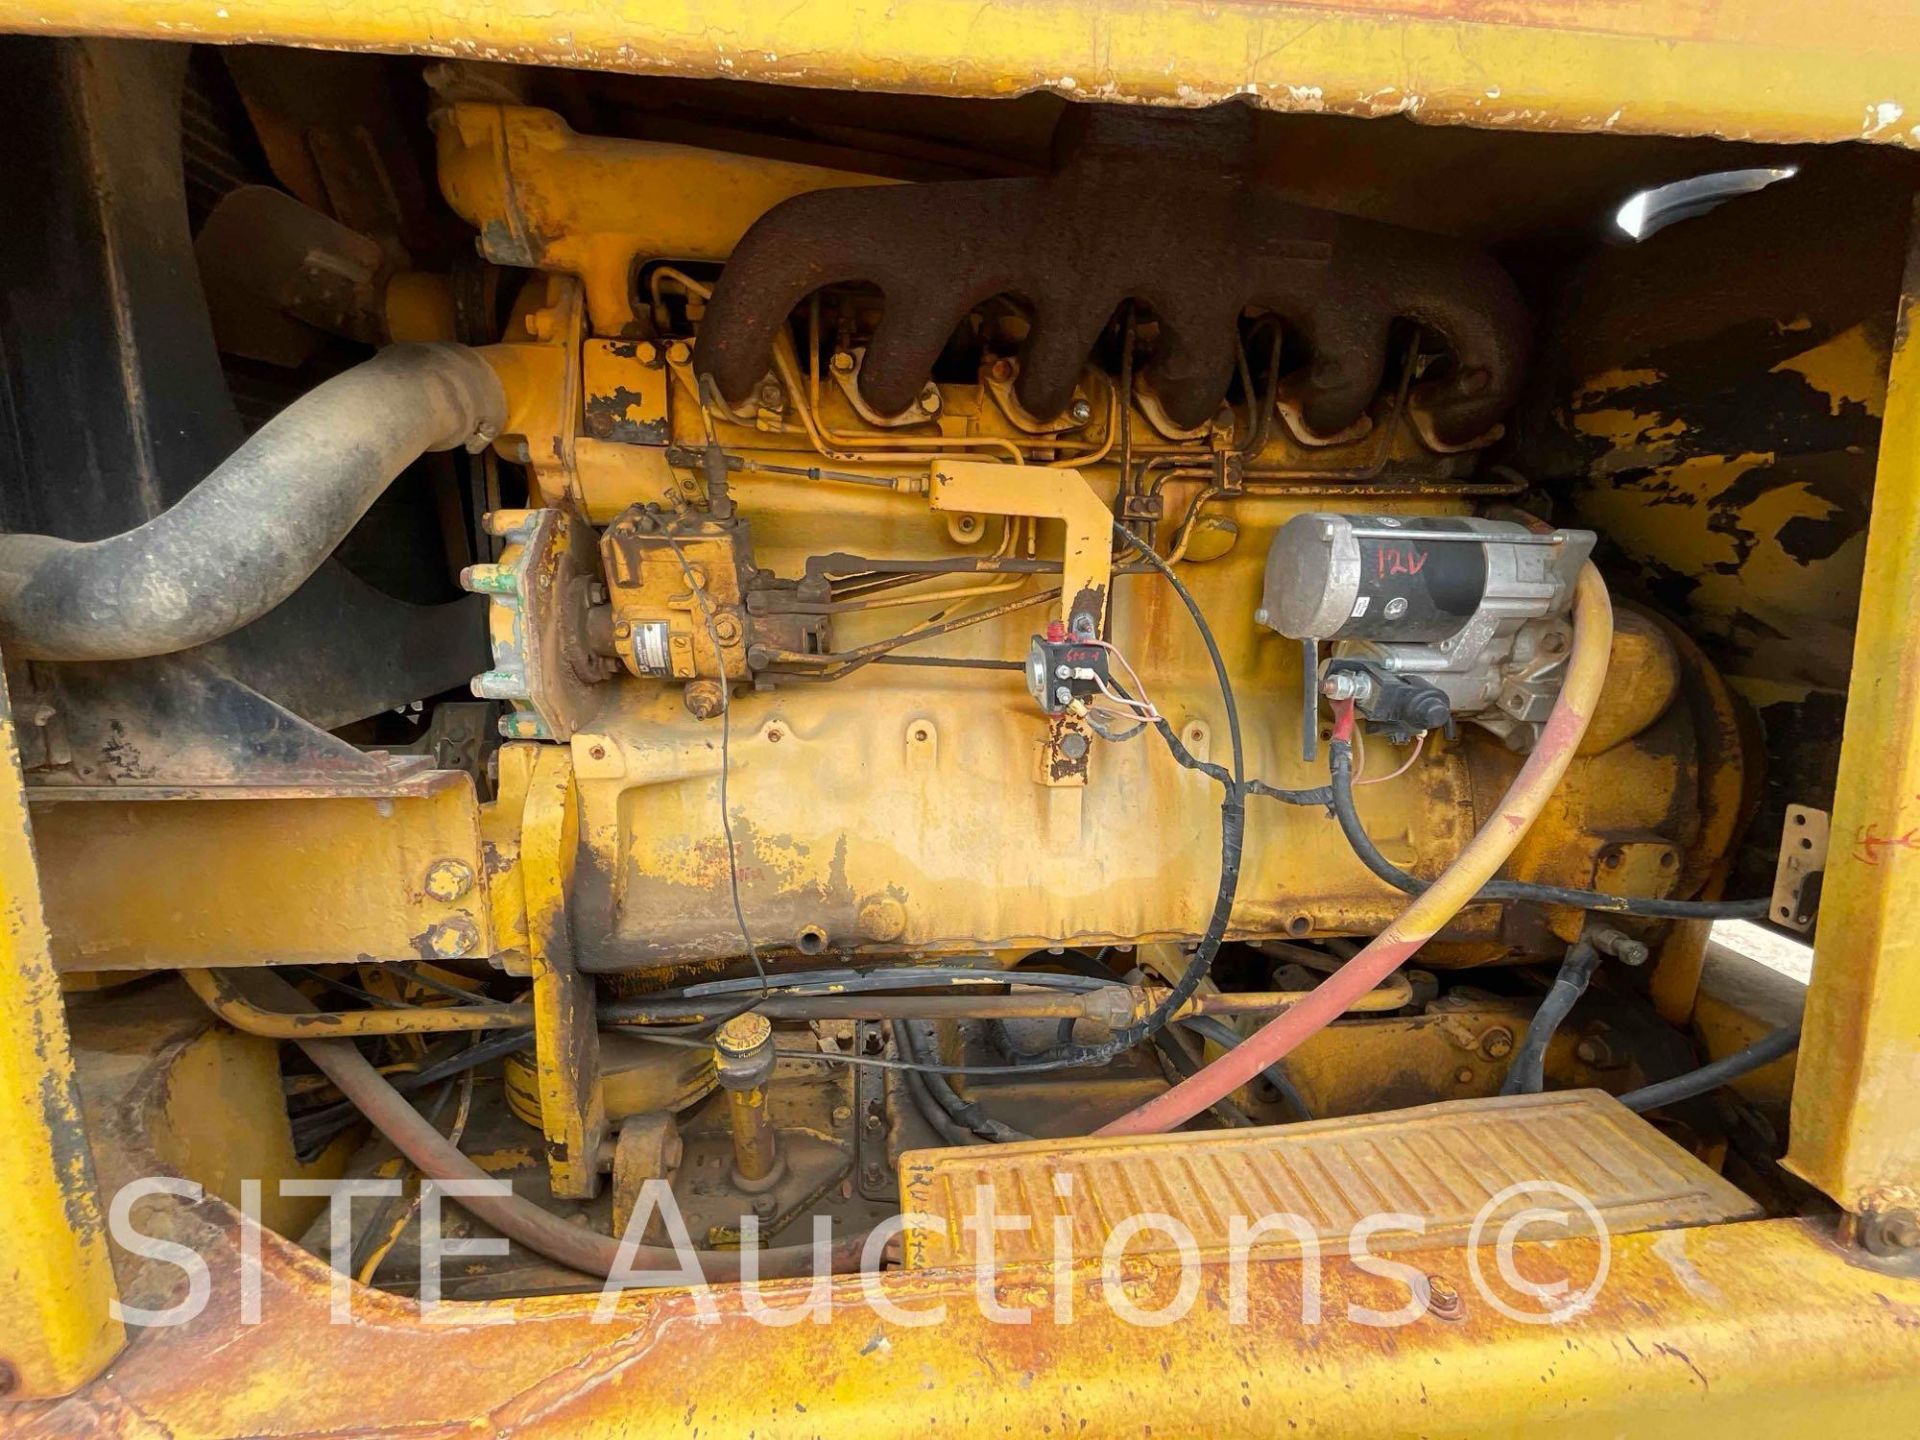 John Deere 570 Motor Grader - Image 17 of 34